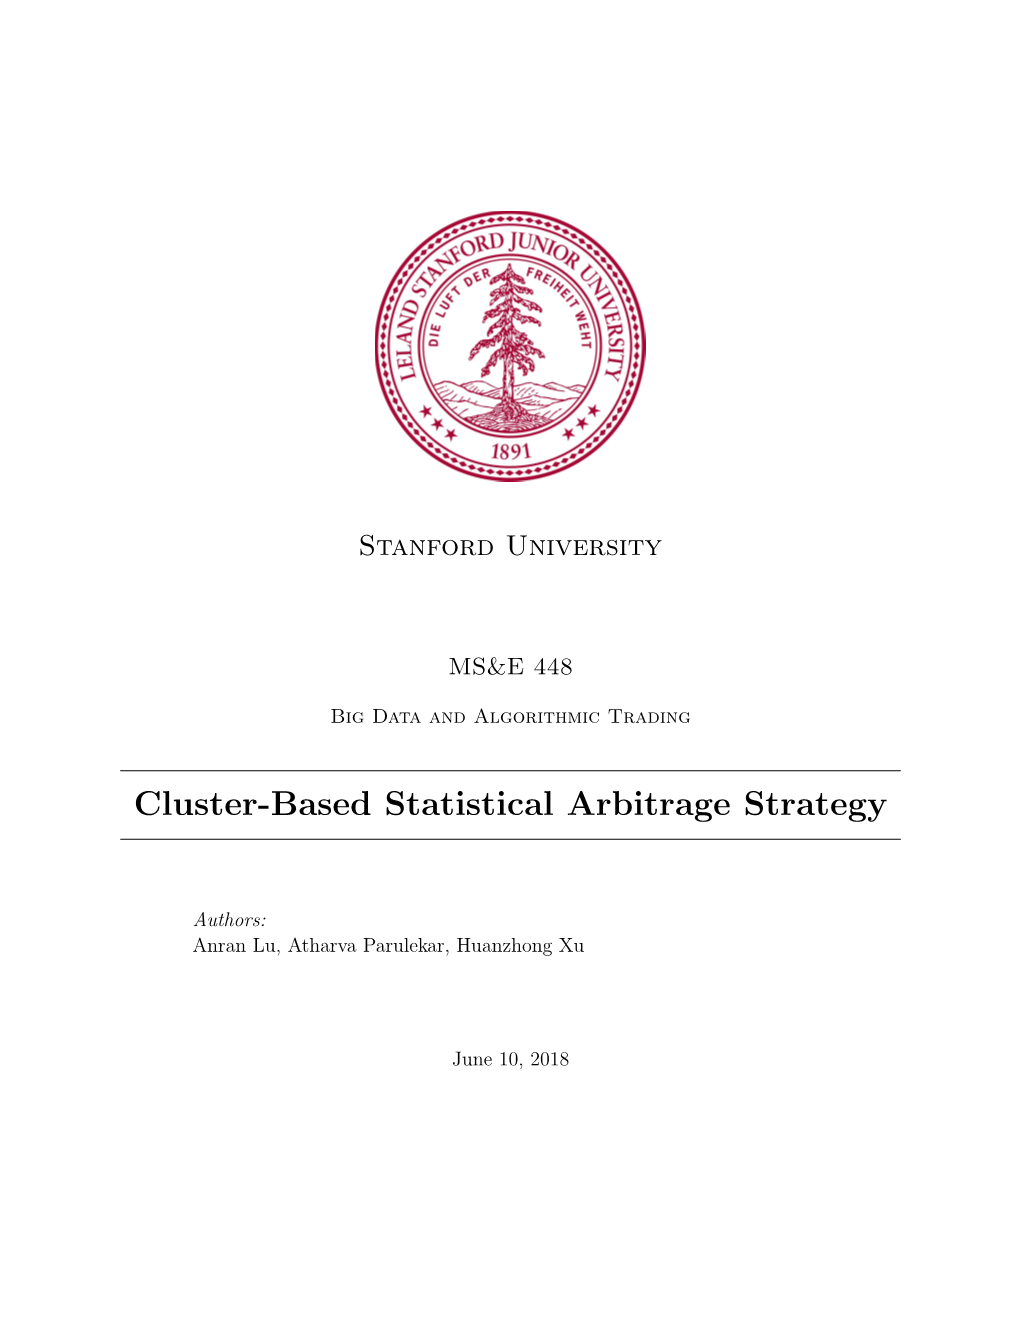 Cluster-Based Statistical Arbitrage Strategy